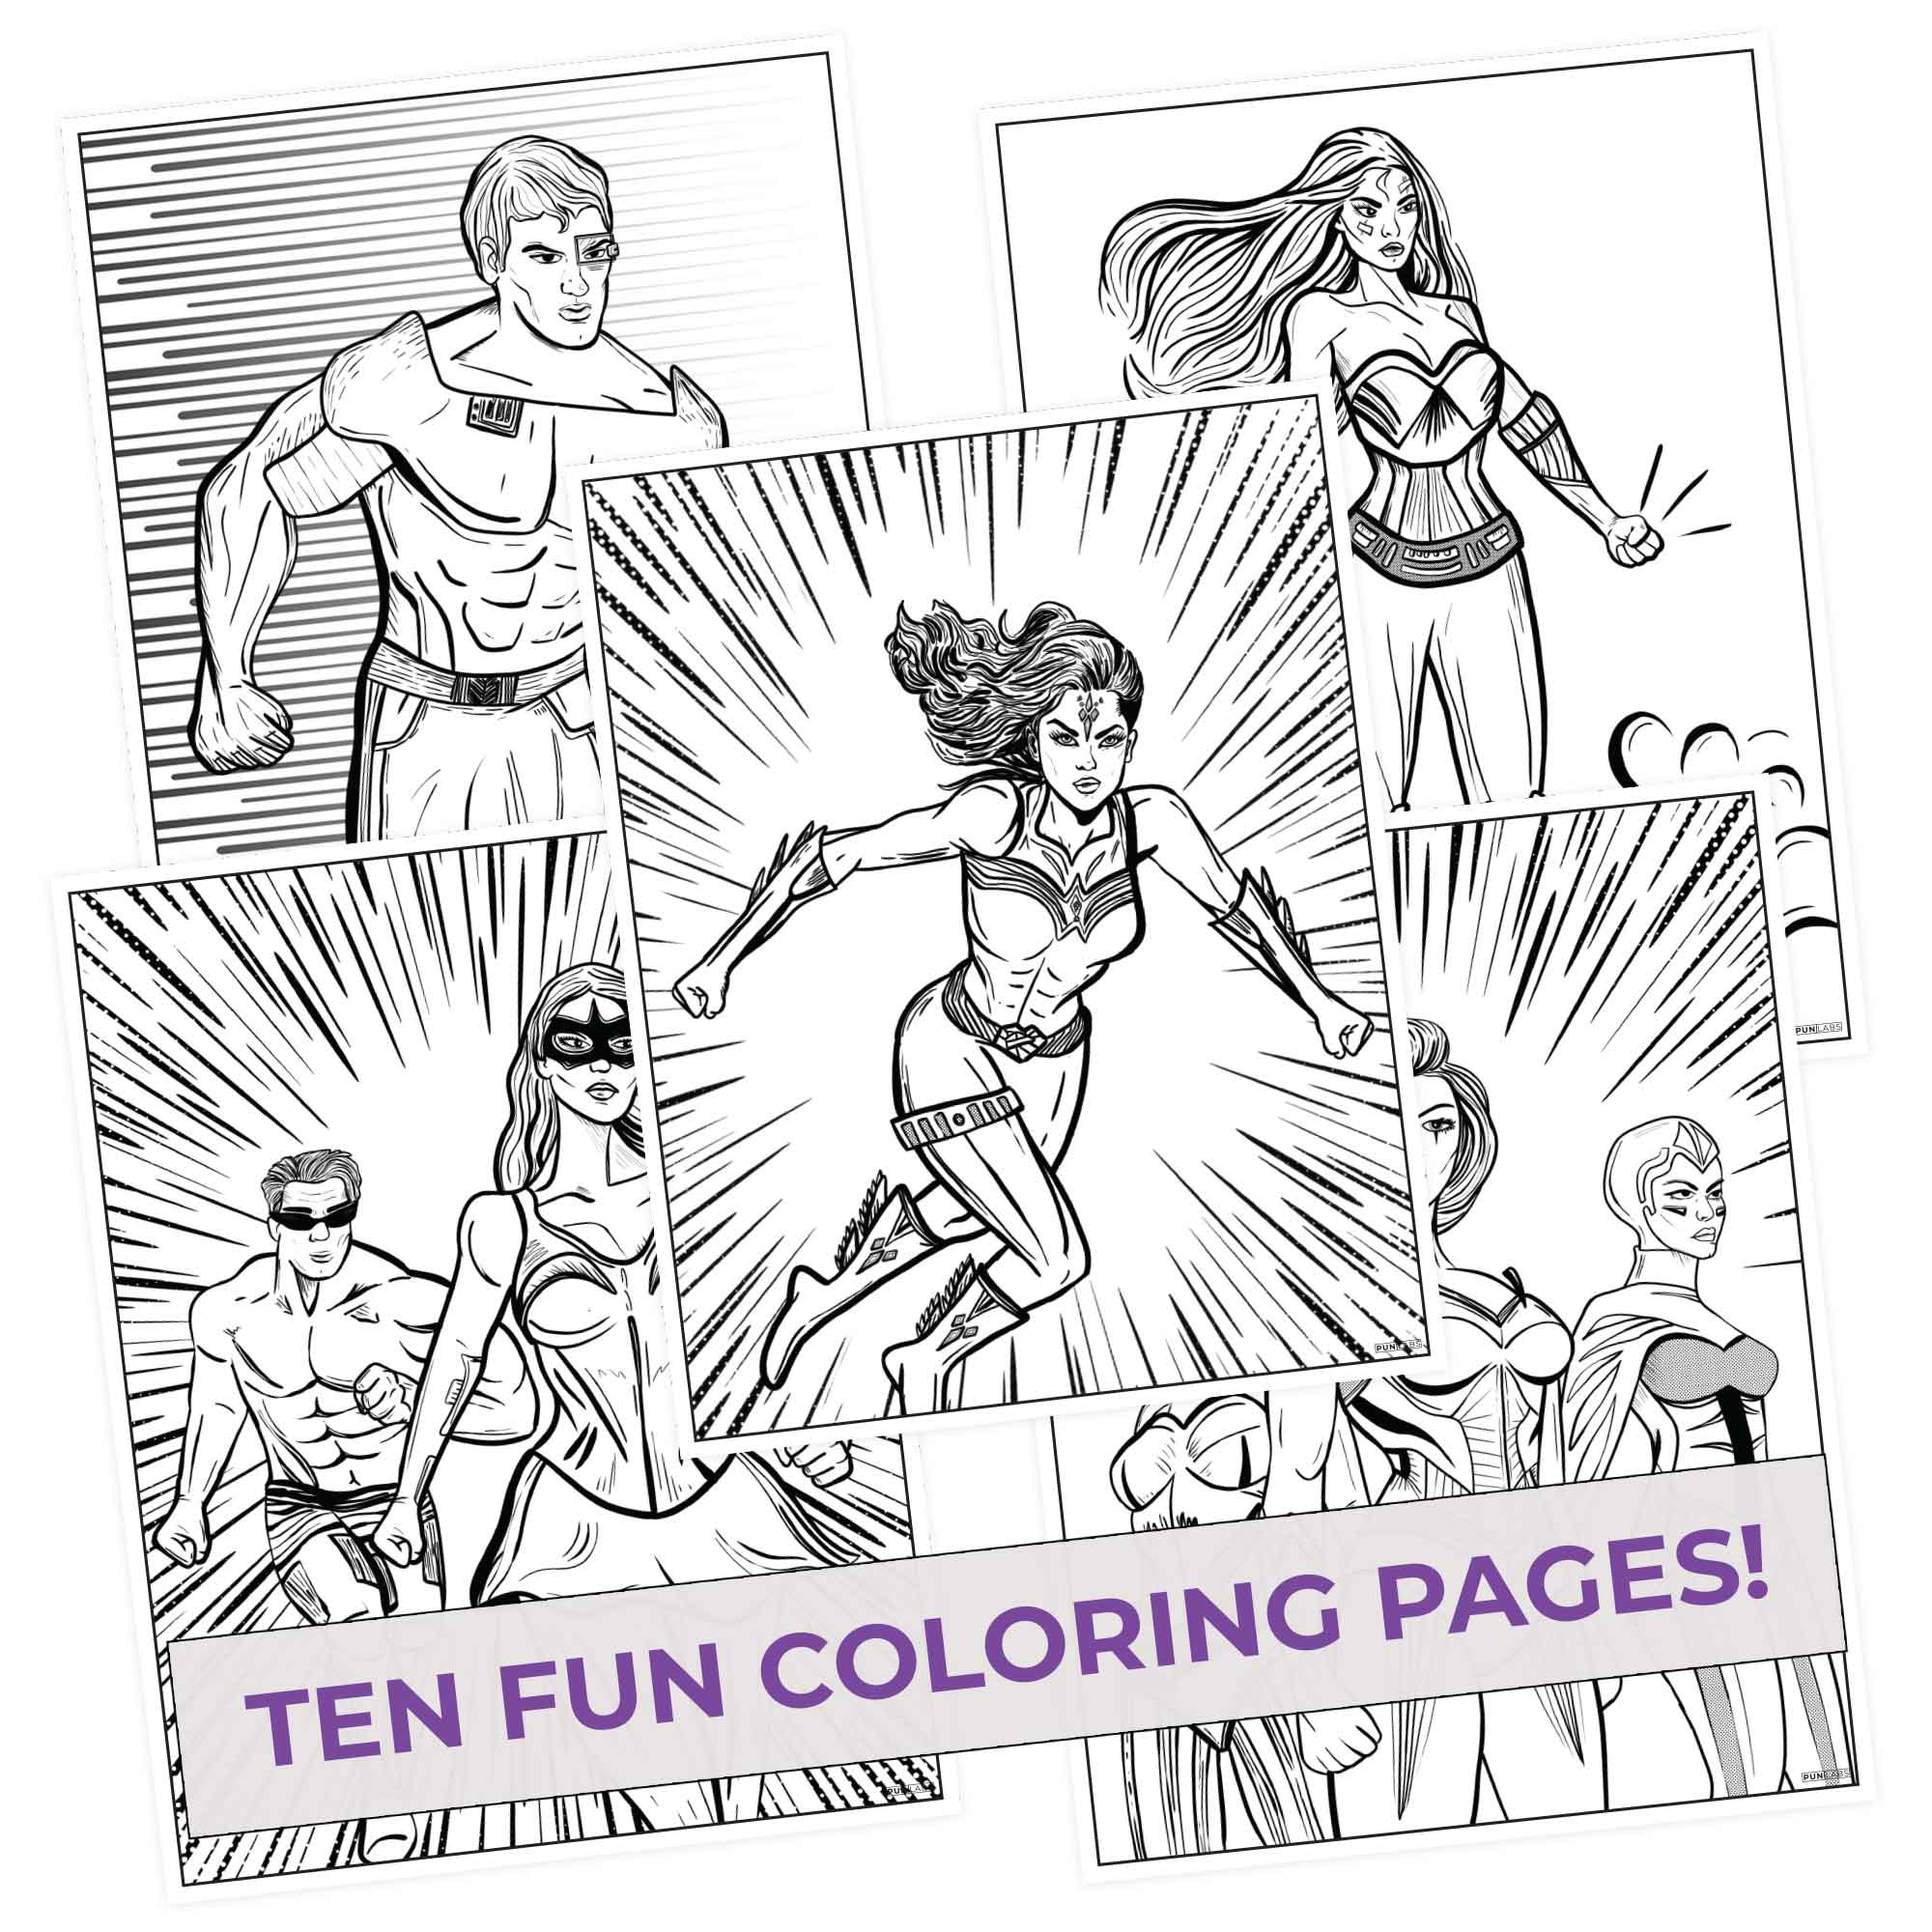 girl kid superhero coloring page